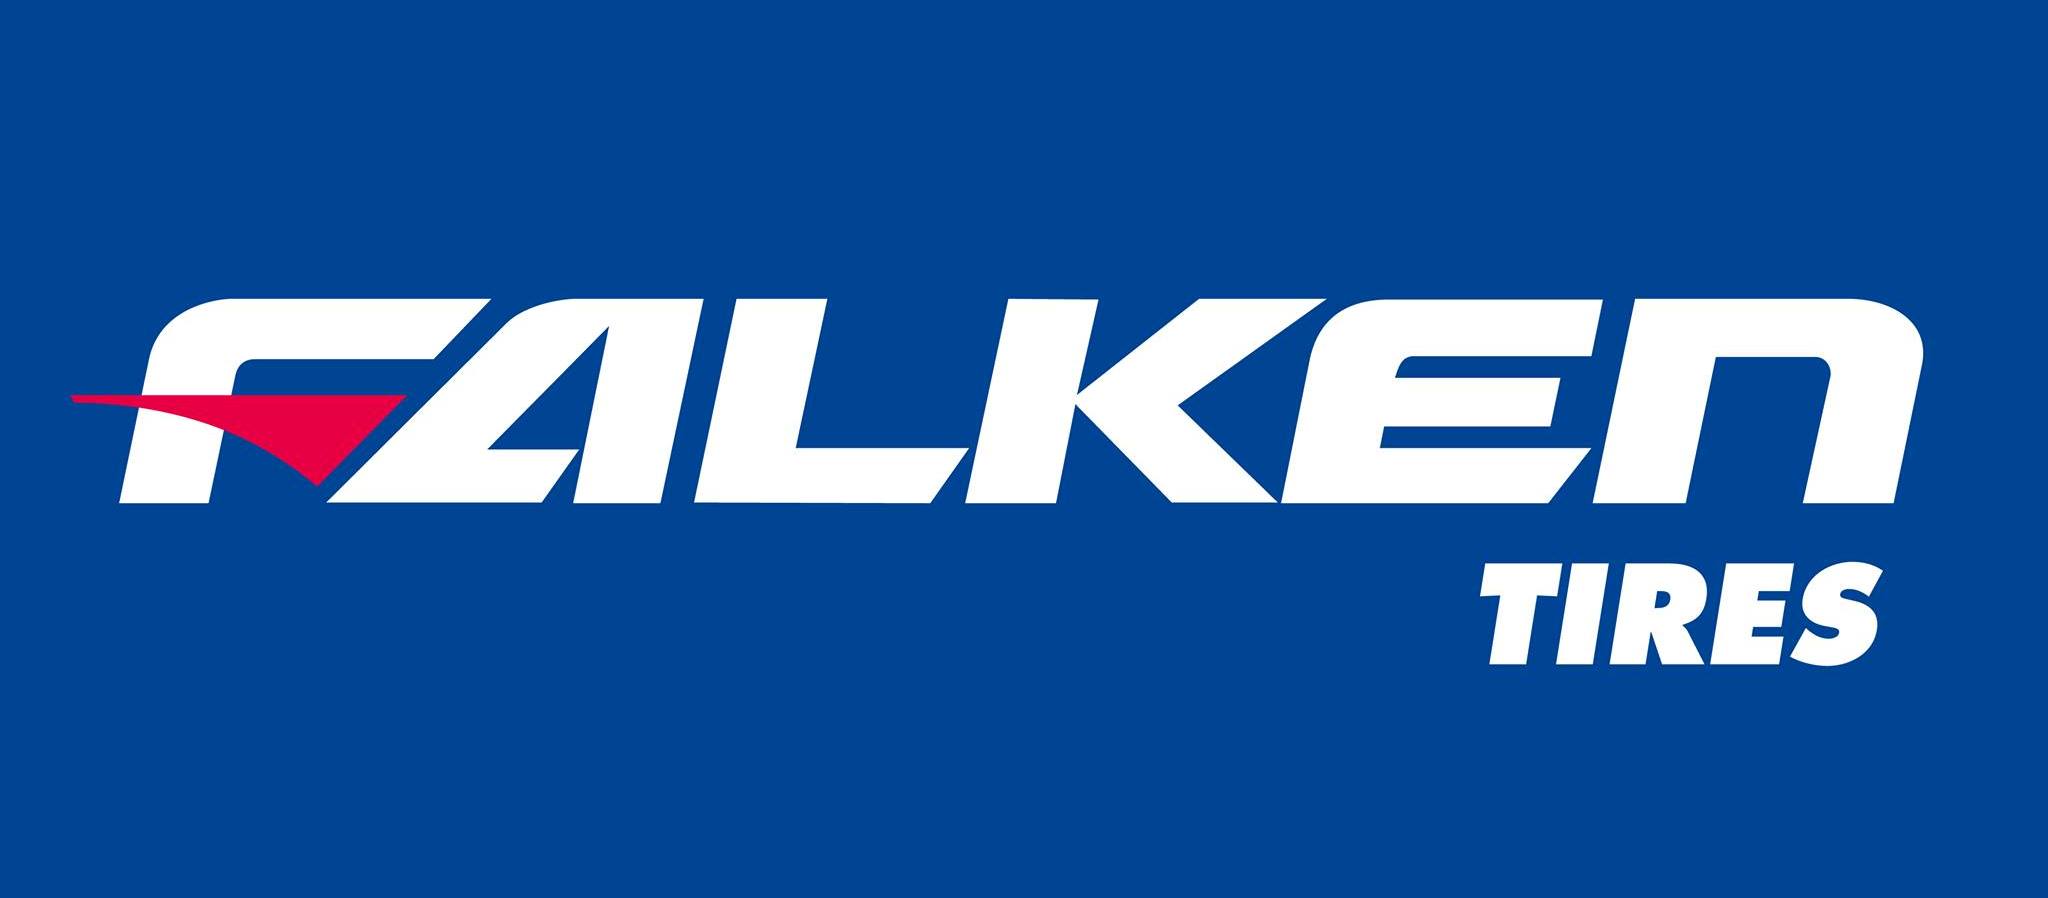 Falken Tire Logo